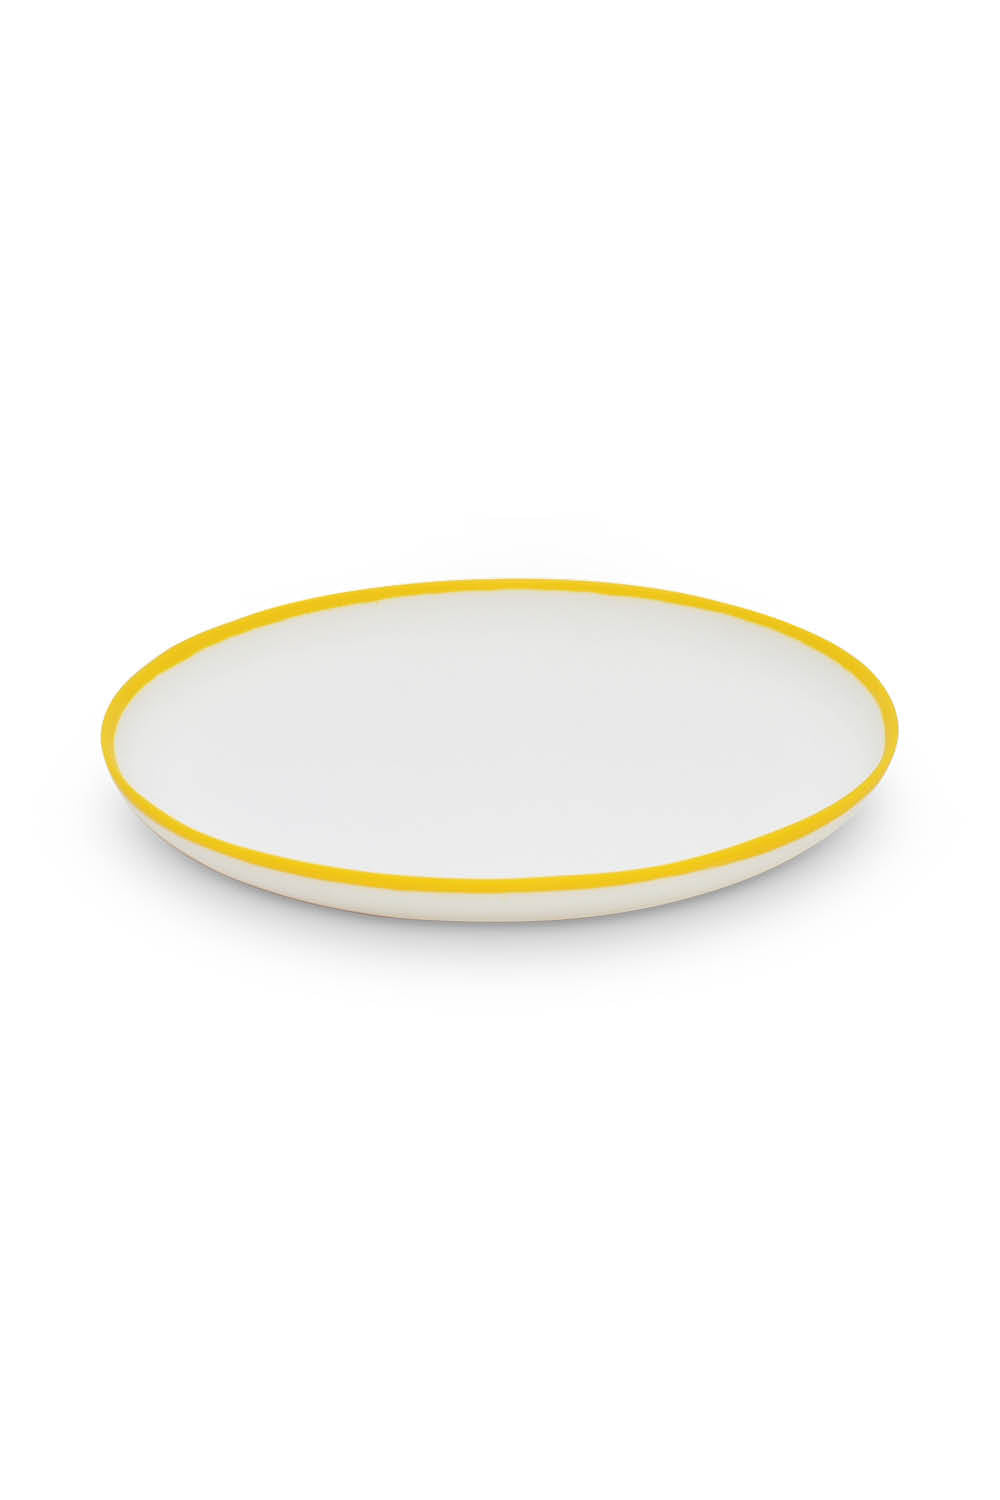 LIGNE Large Platter in White With Sunshine Yellow Rim